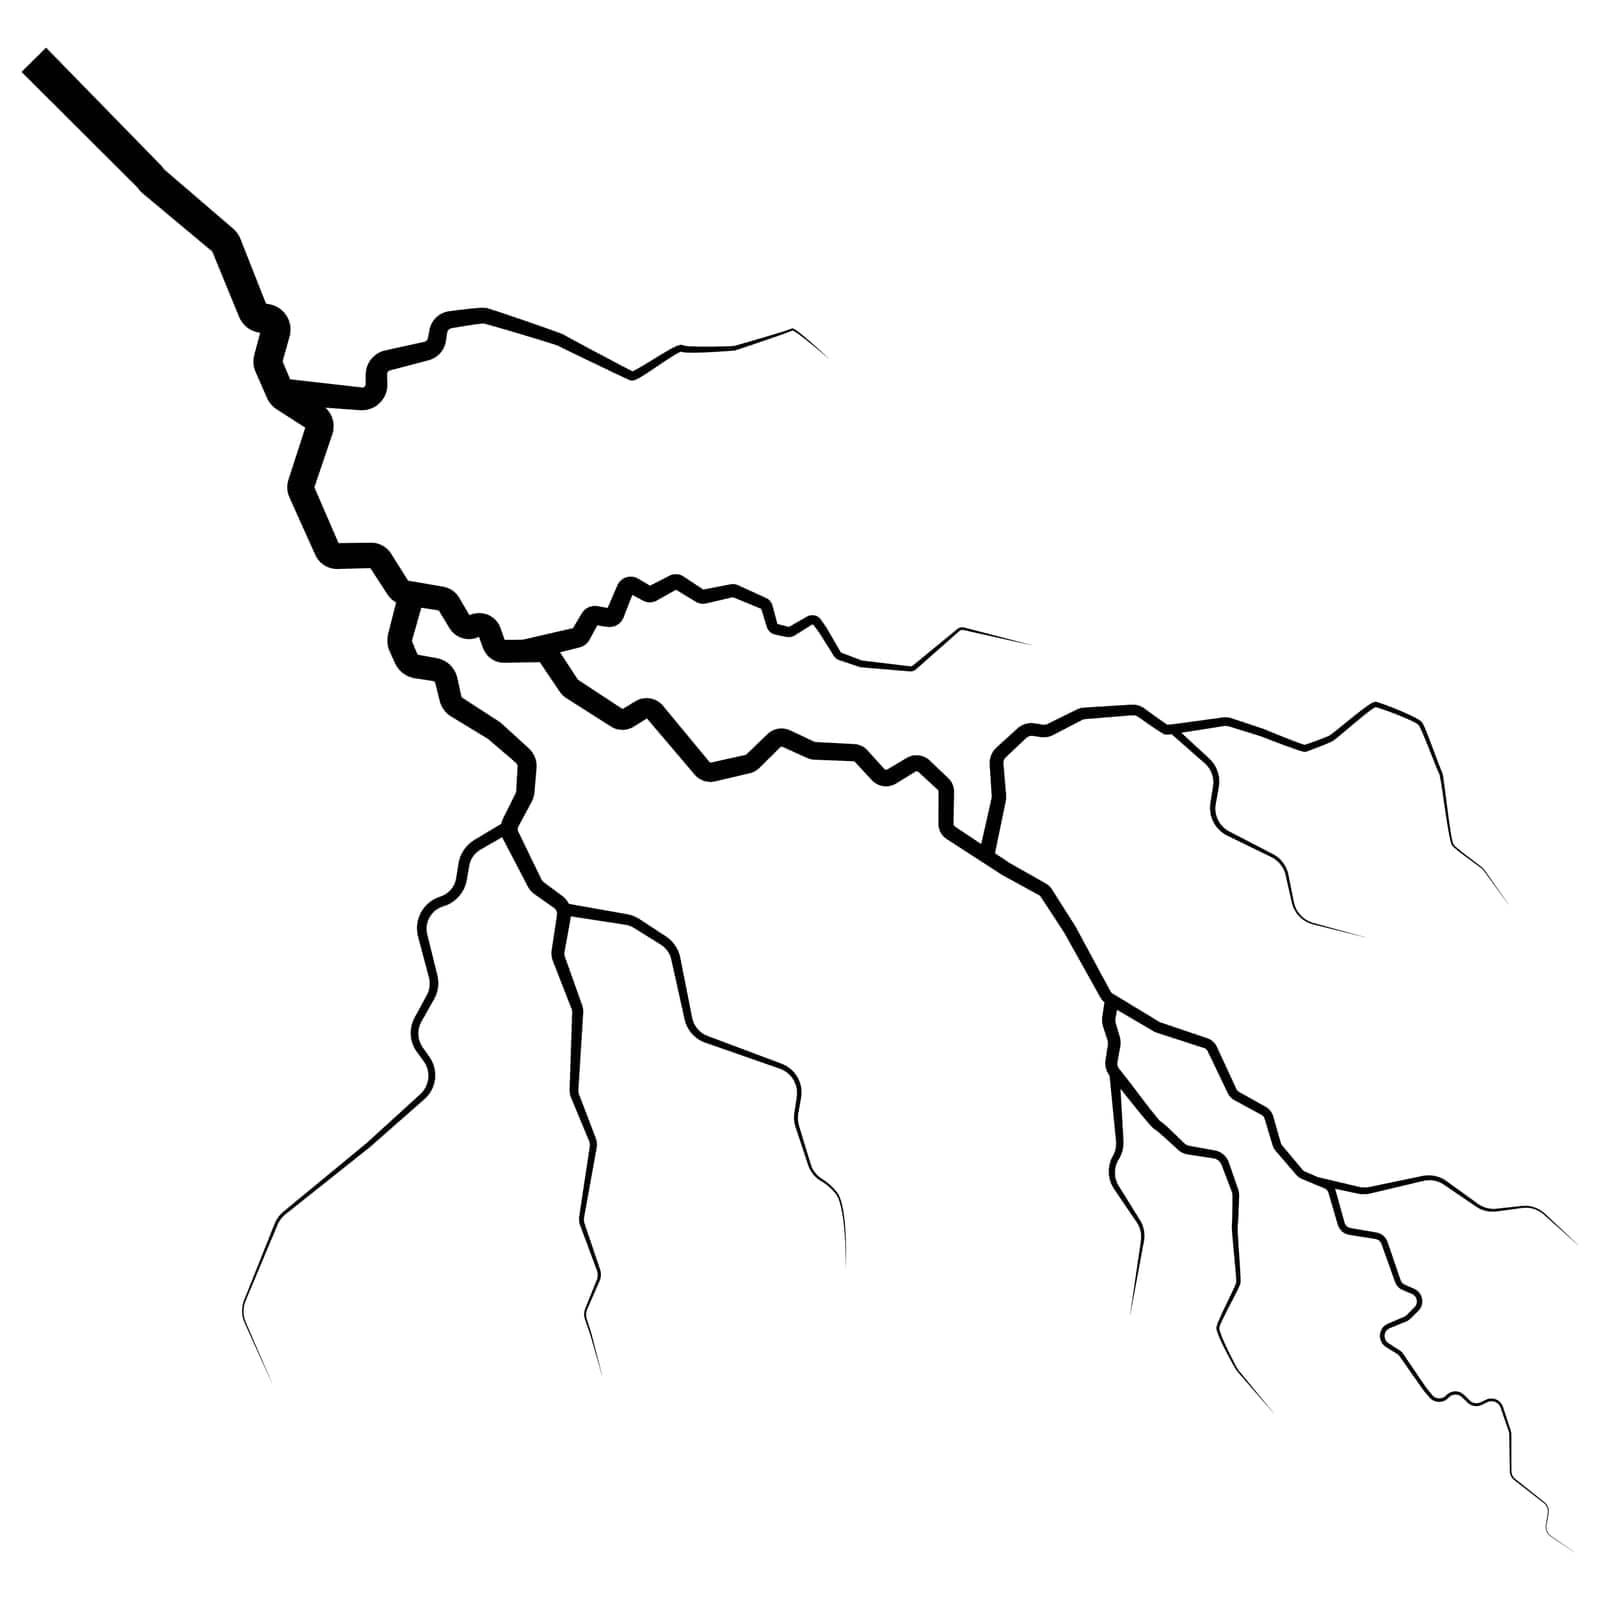 Lightning thunder, electricity storm light energy, flash, rays power flare by koksikoks